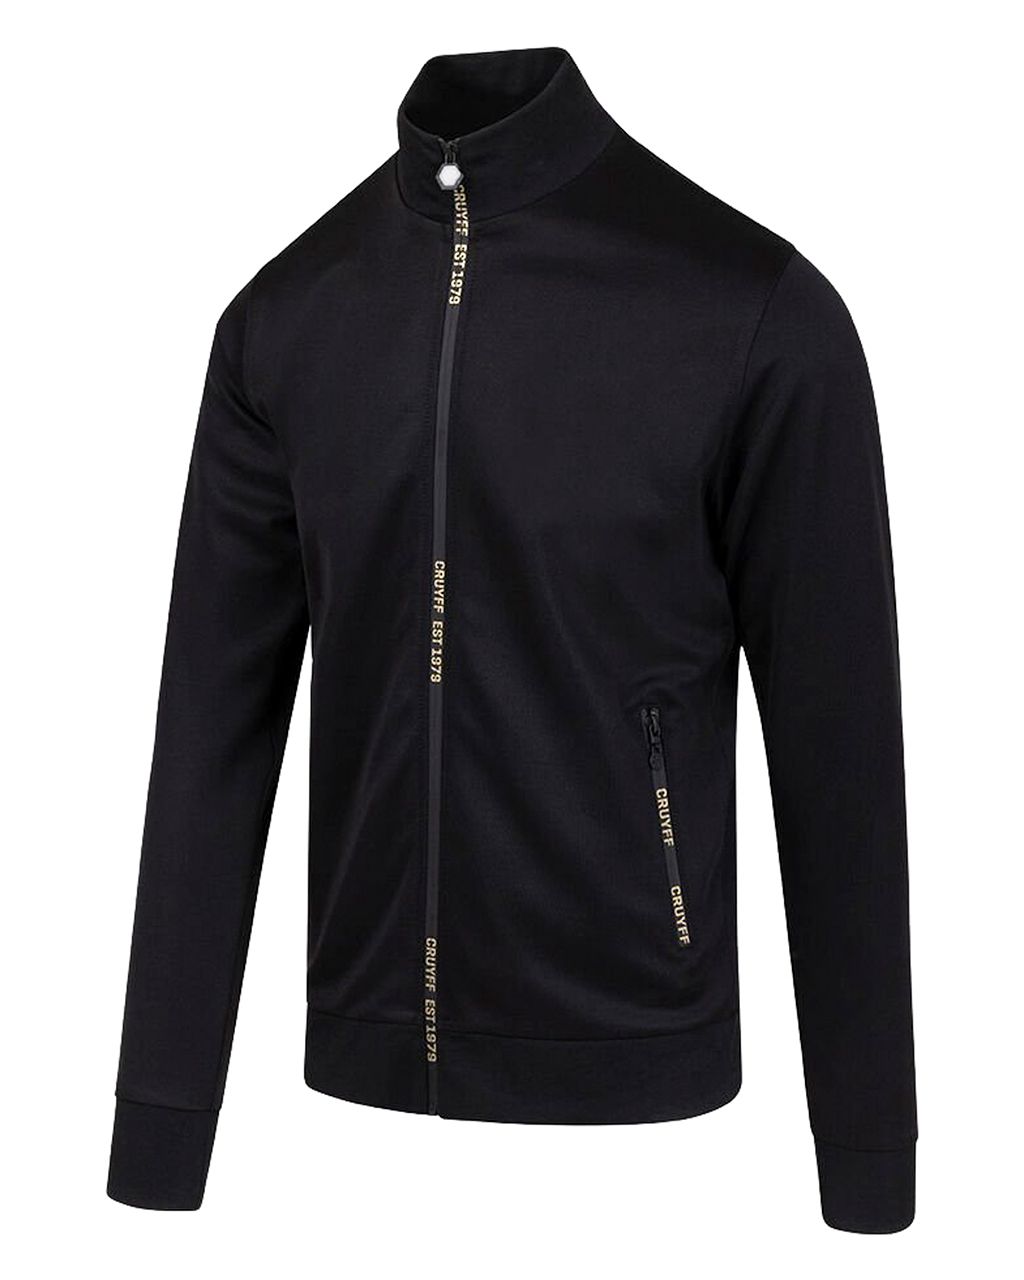 Cruyff Enzo Track Top Vest Zwart 078500-001-L